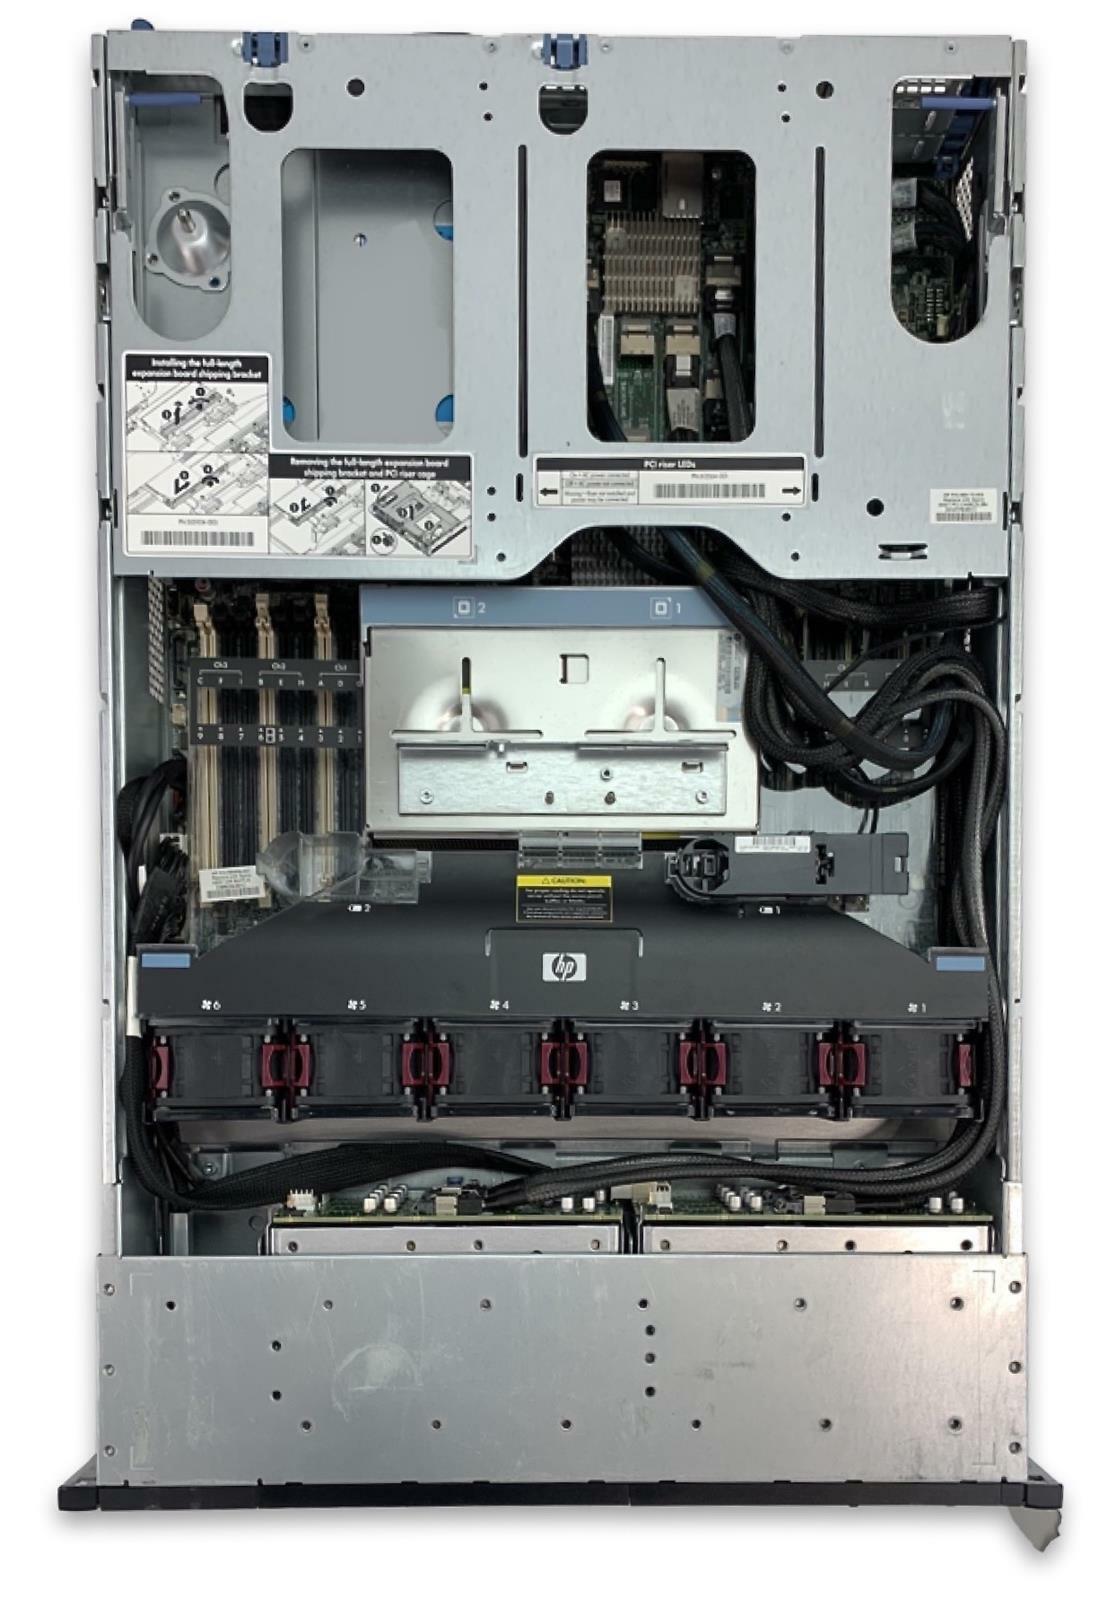 HP ProLiant DL380 G7 2x Quad Core Xeon E5620 2.40GHz 16GB RAM 12x 146GB HDDs